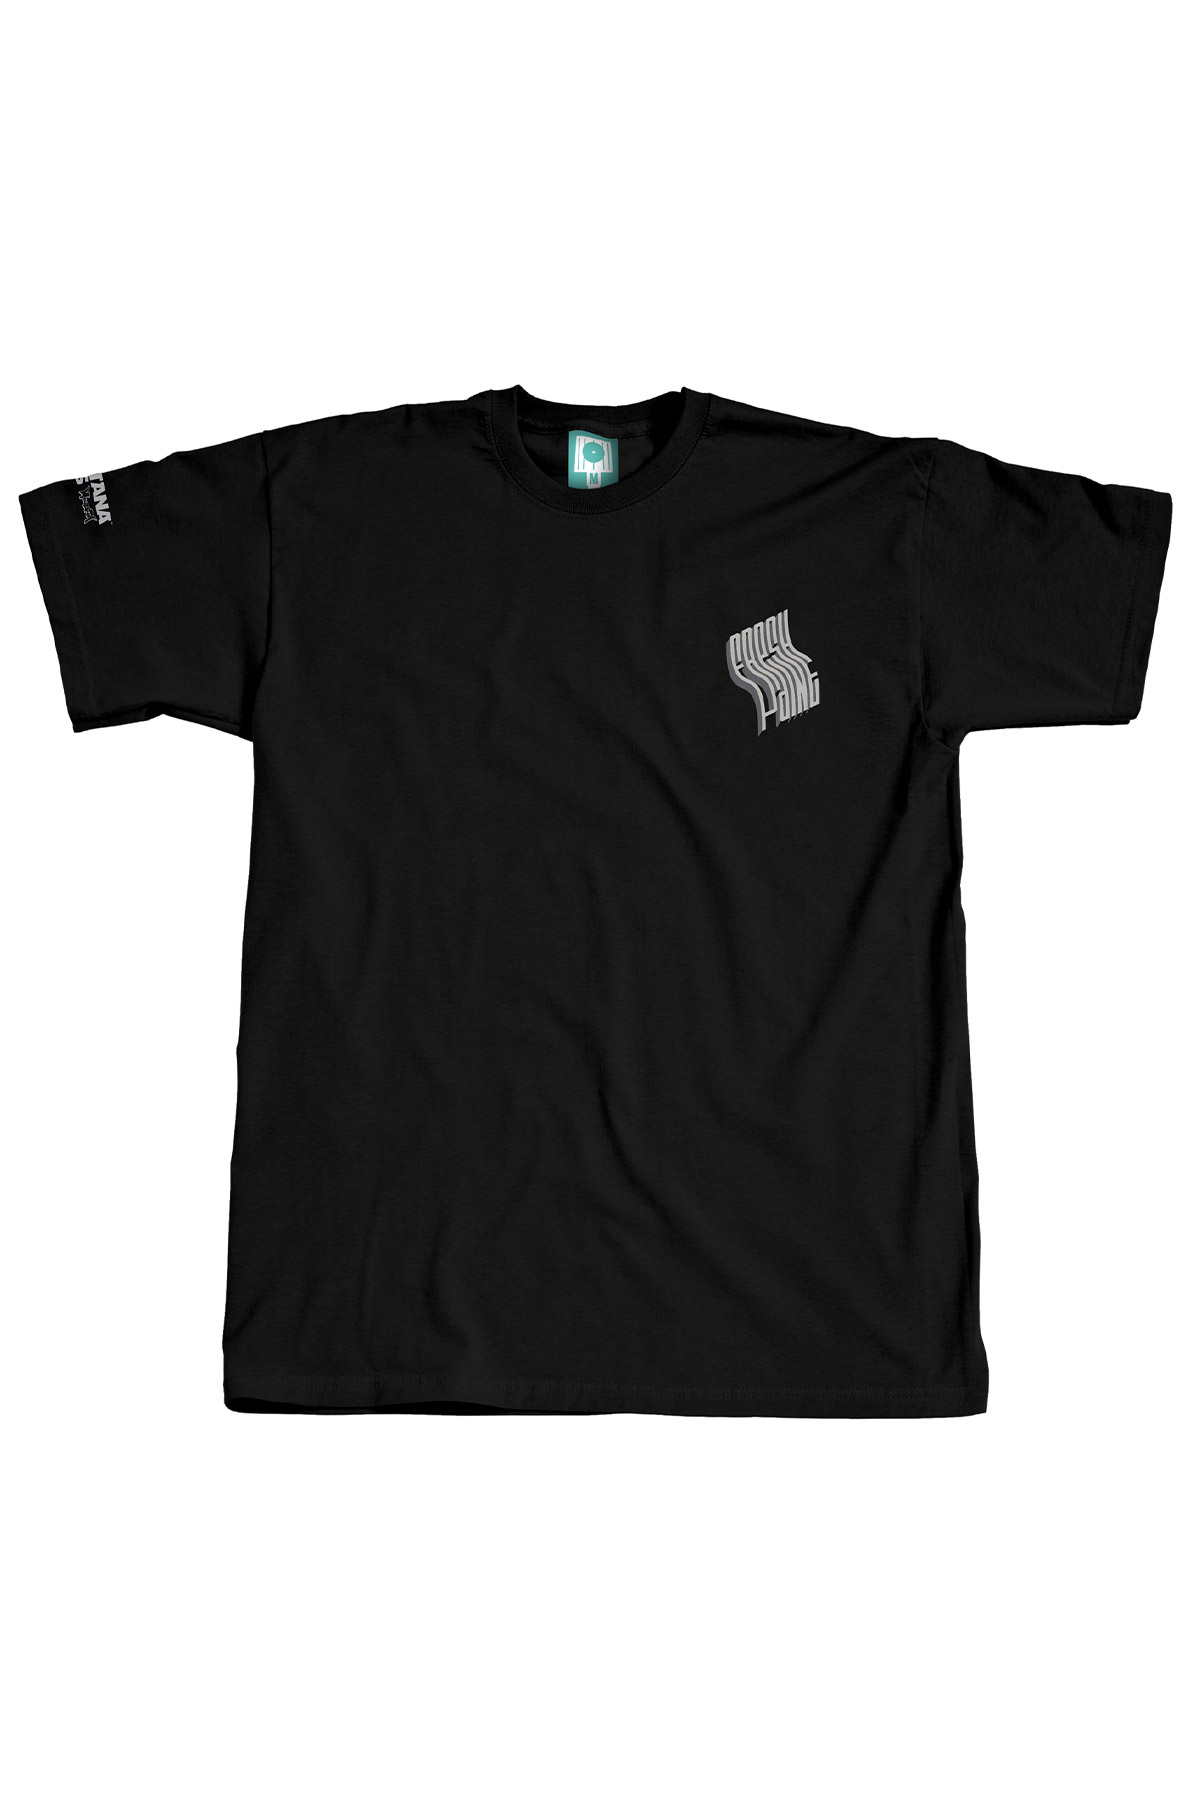 Montana FRESH PAINT 3D Black T-Shirt by Prefid